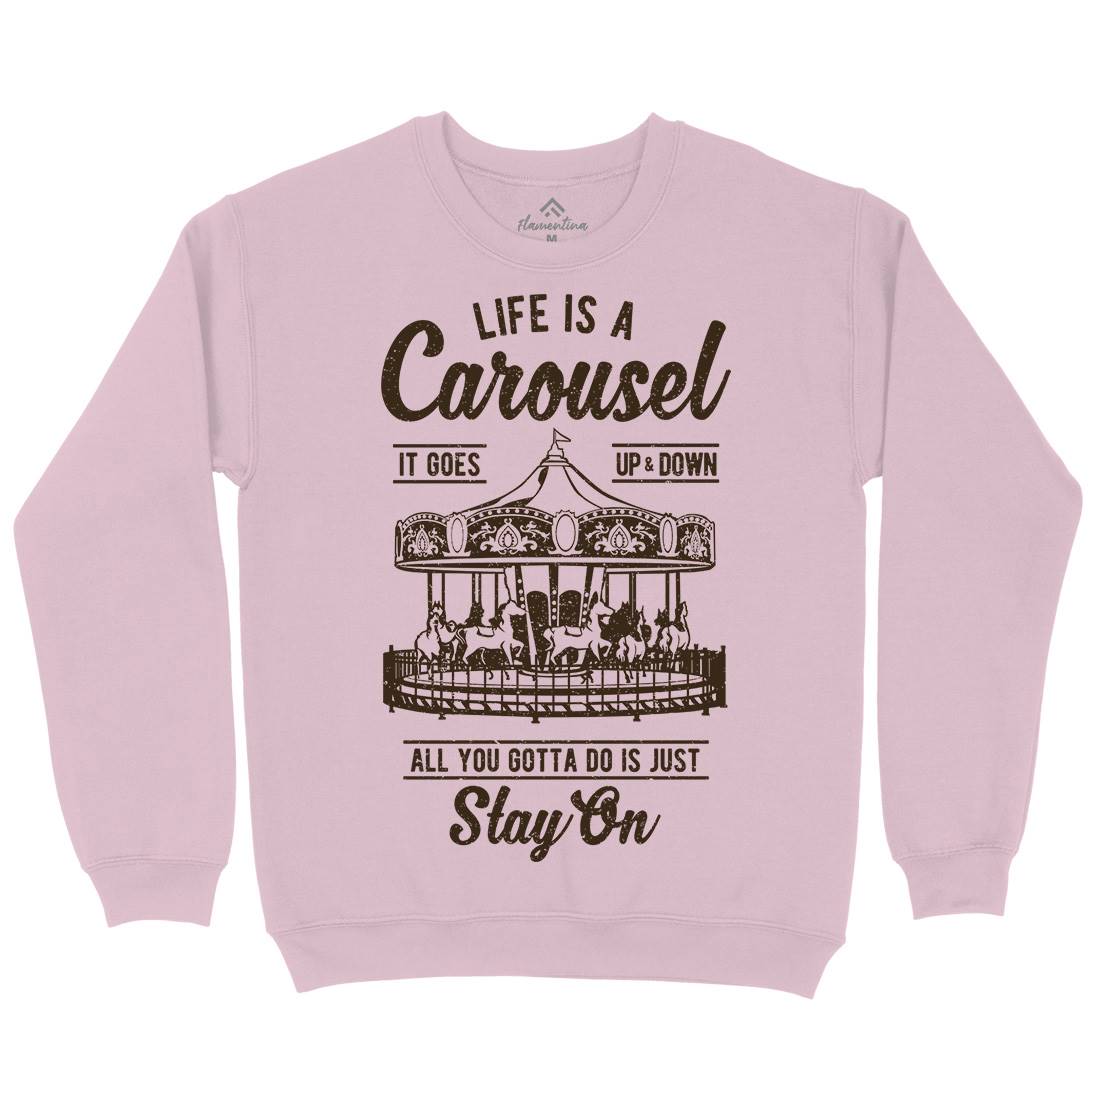 Carousel Kids Crew Neck Sweatshirt Retro A633